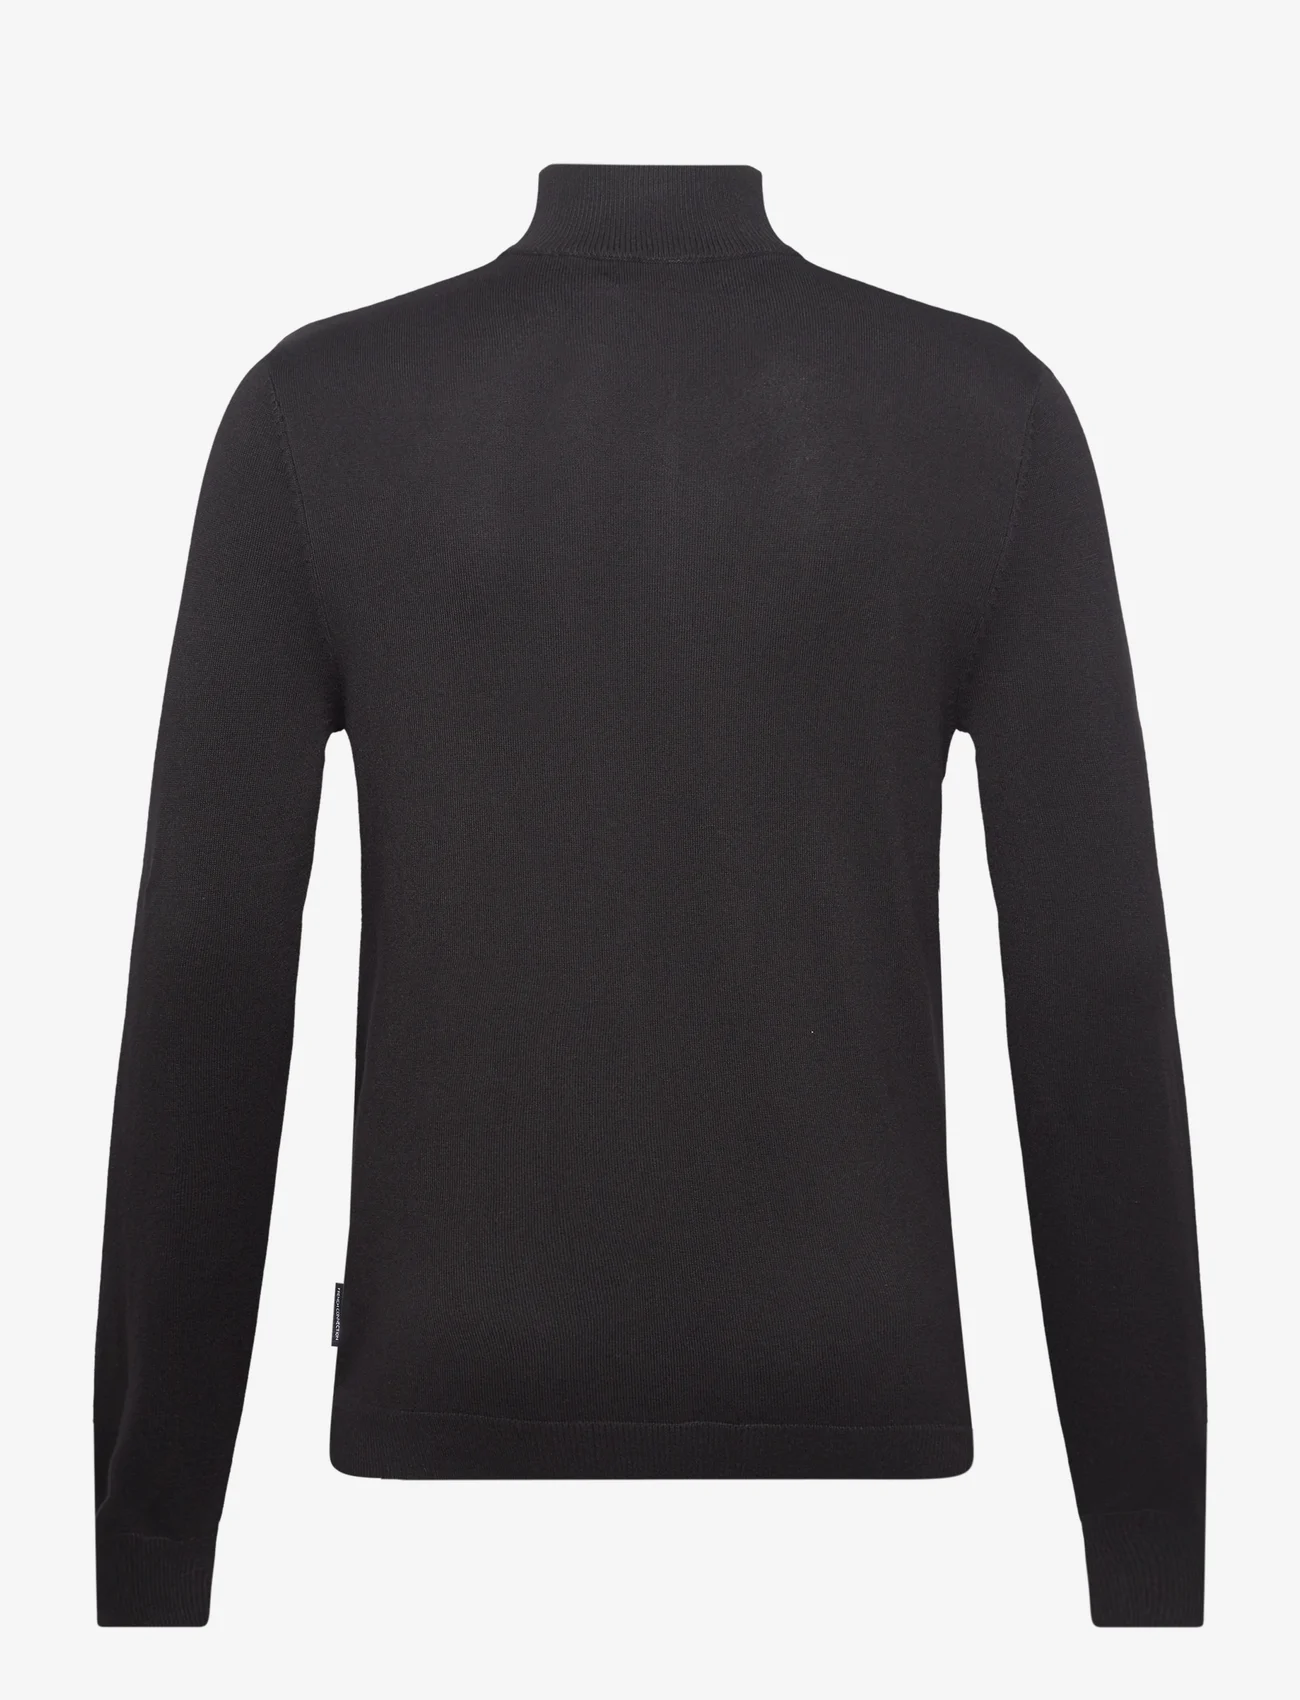 French Connection - HALF ZIP - sweatshirts - black - 1